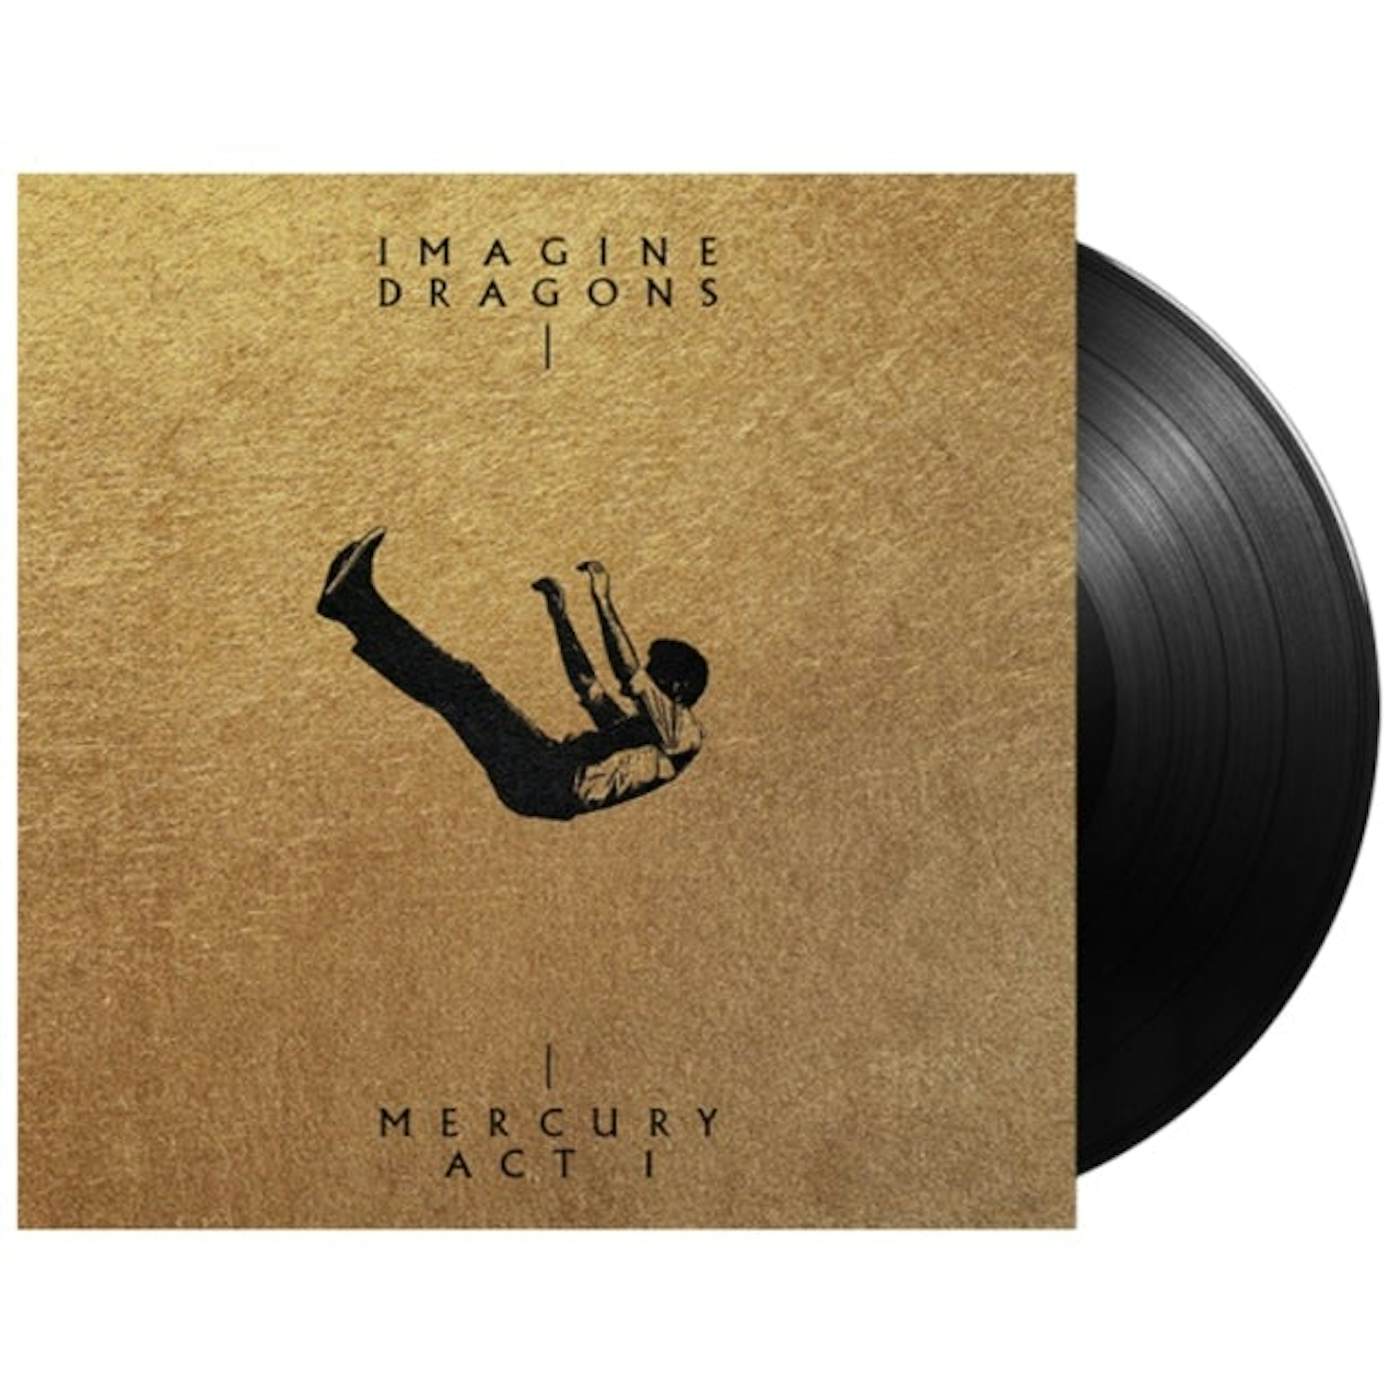 Imagine Dragons LP Vinyl Record - Mercury: Act 1